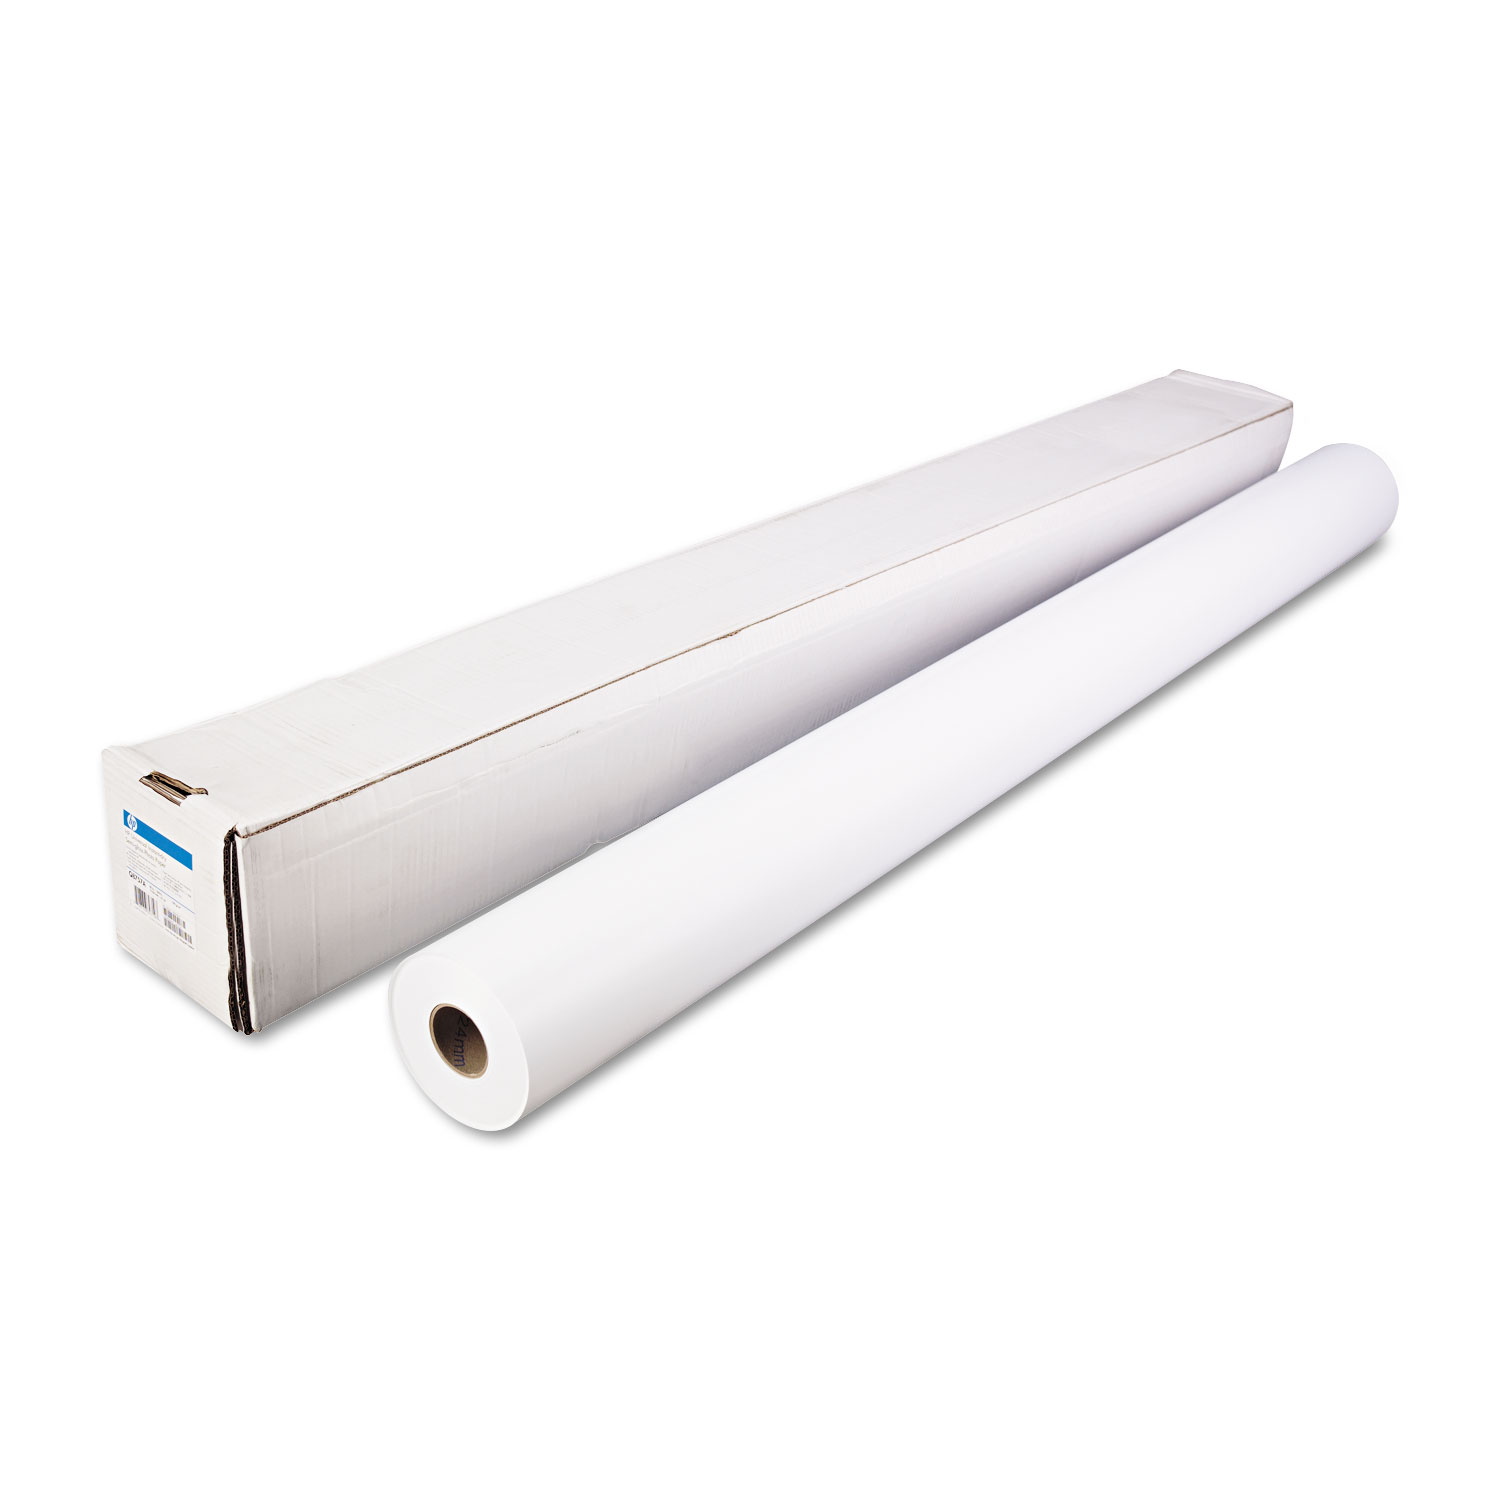  HP Q8757A Universal Instant-Dry Photo Paper, 7.4 mil, 60 x 200 ft, Semi-Gloss White (HEWQ8757A) 